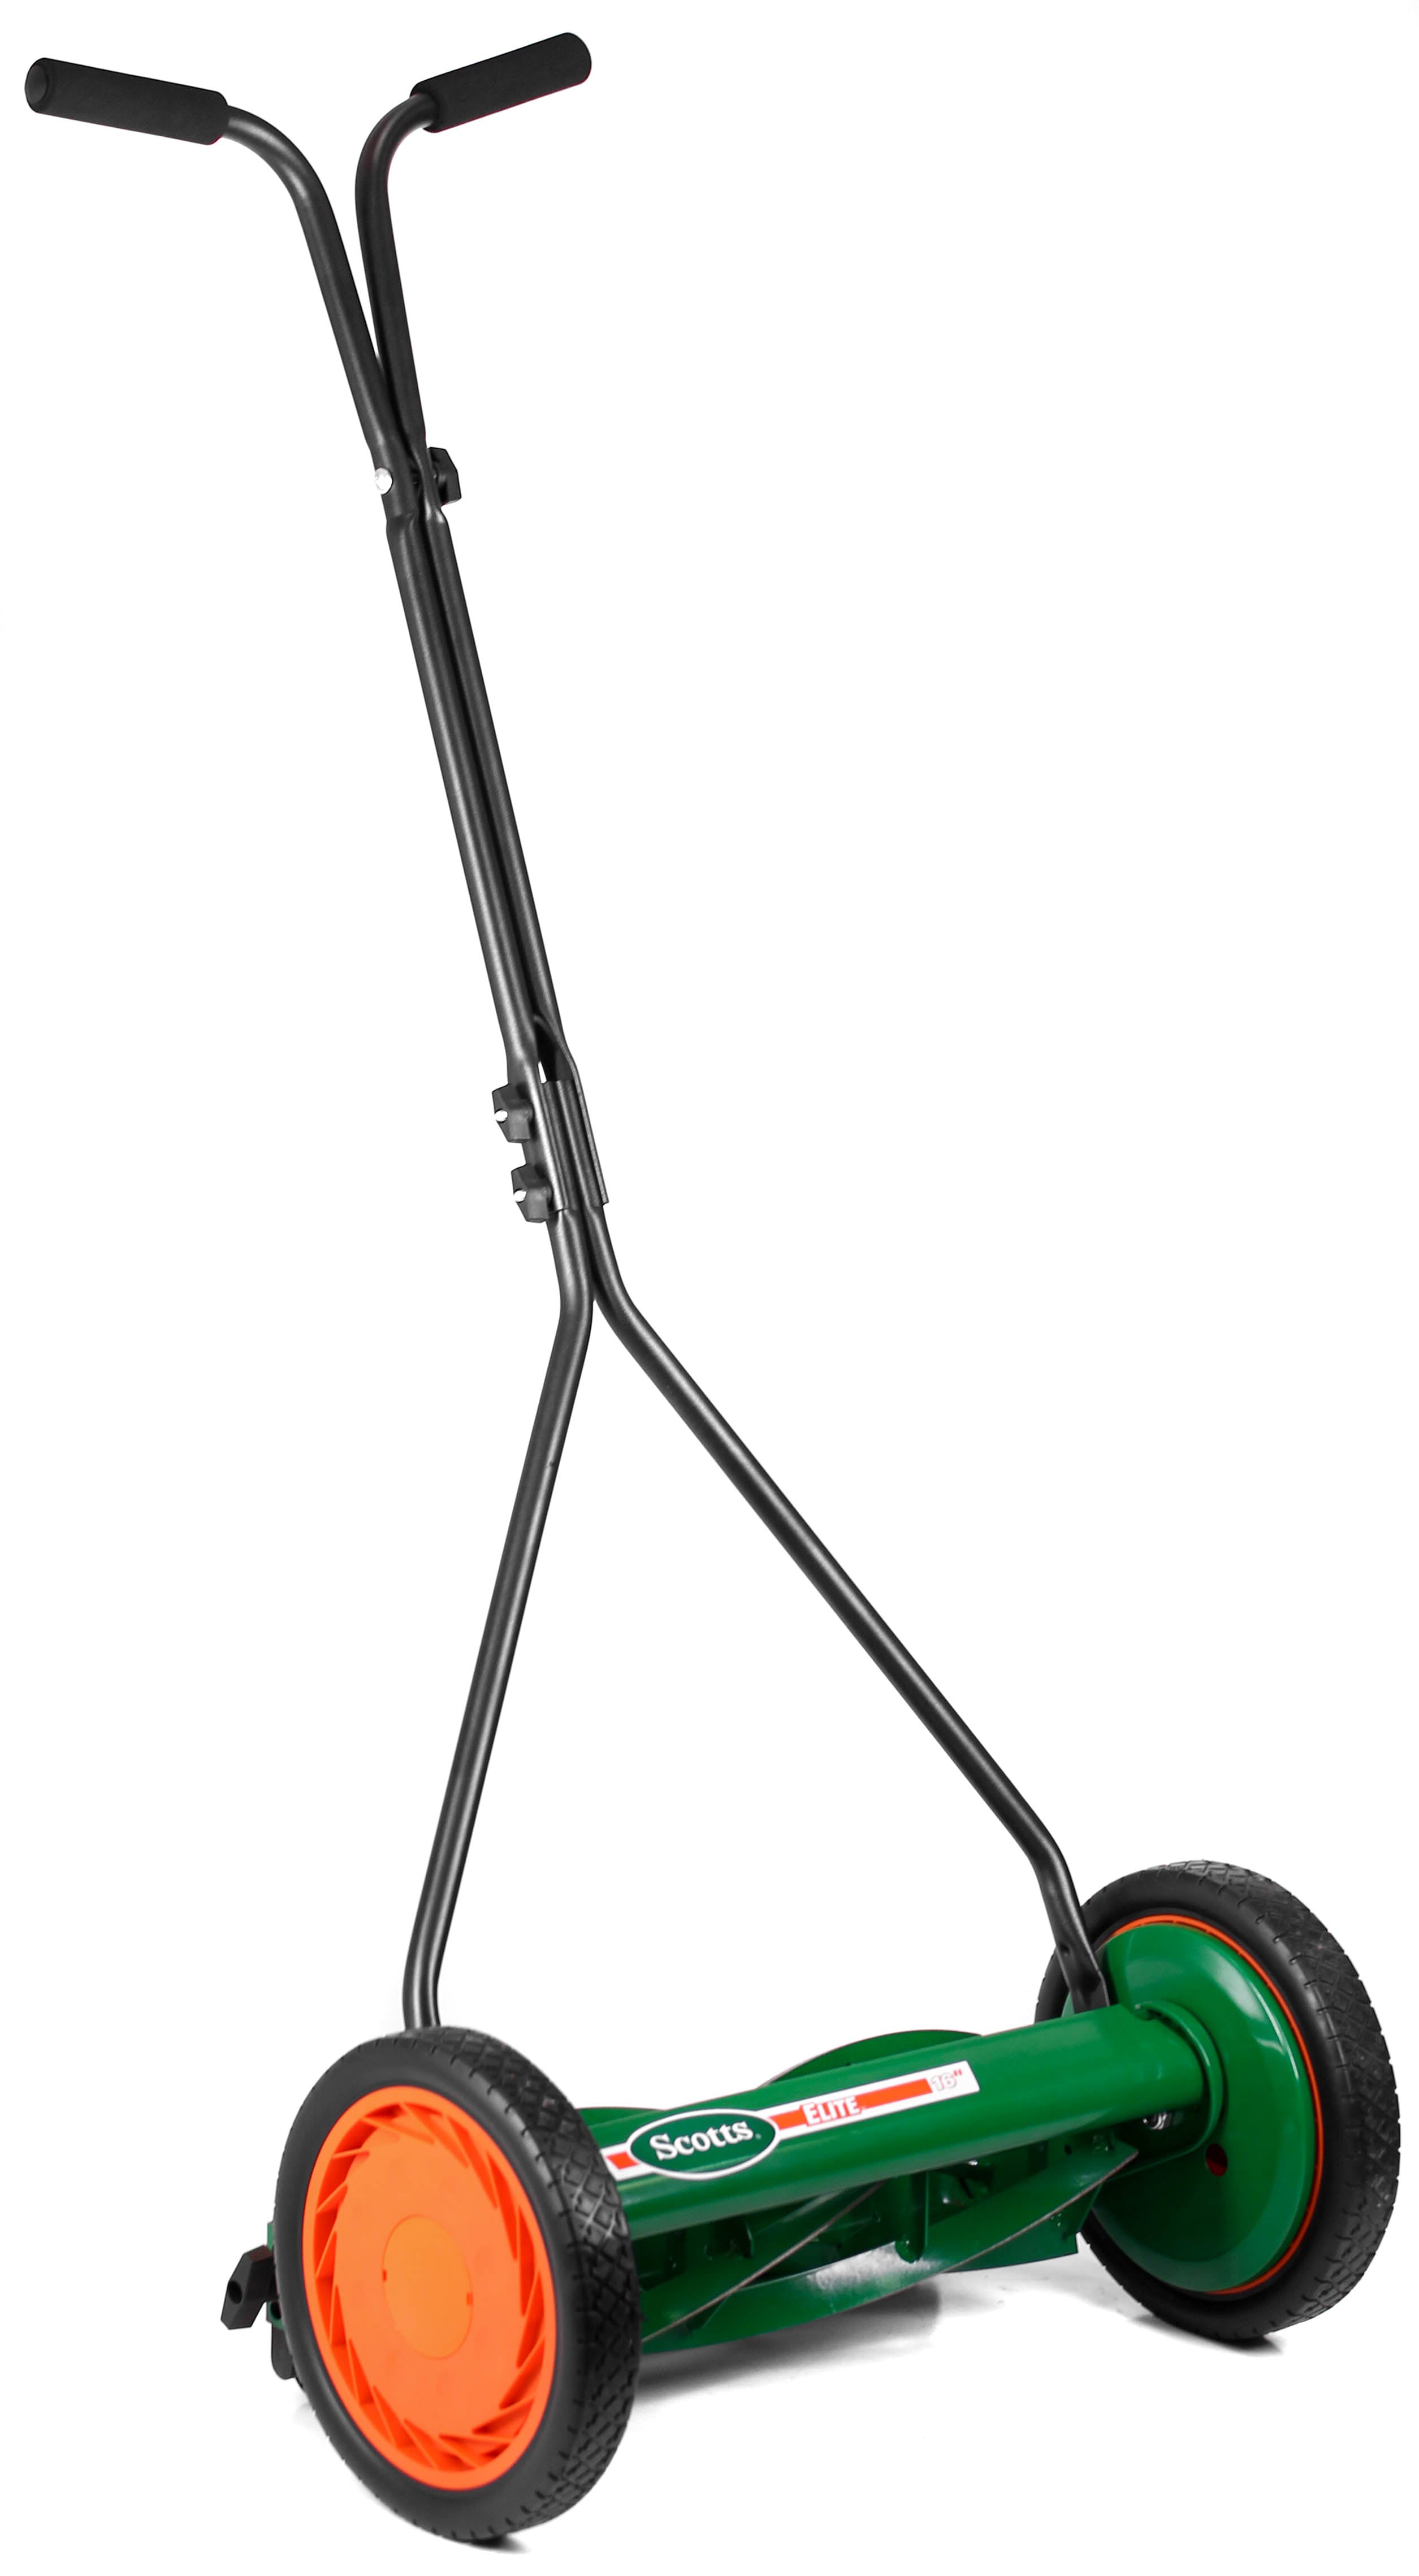 Scotts 16 Manual Reel Mower – American Lawn Mower Co. EST 1895